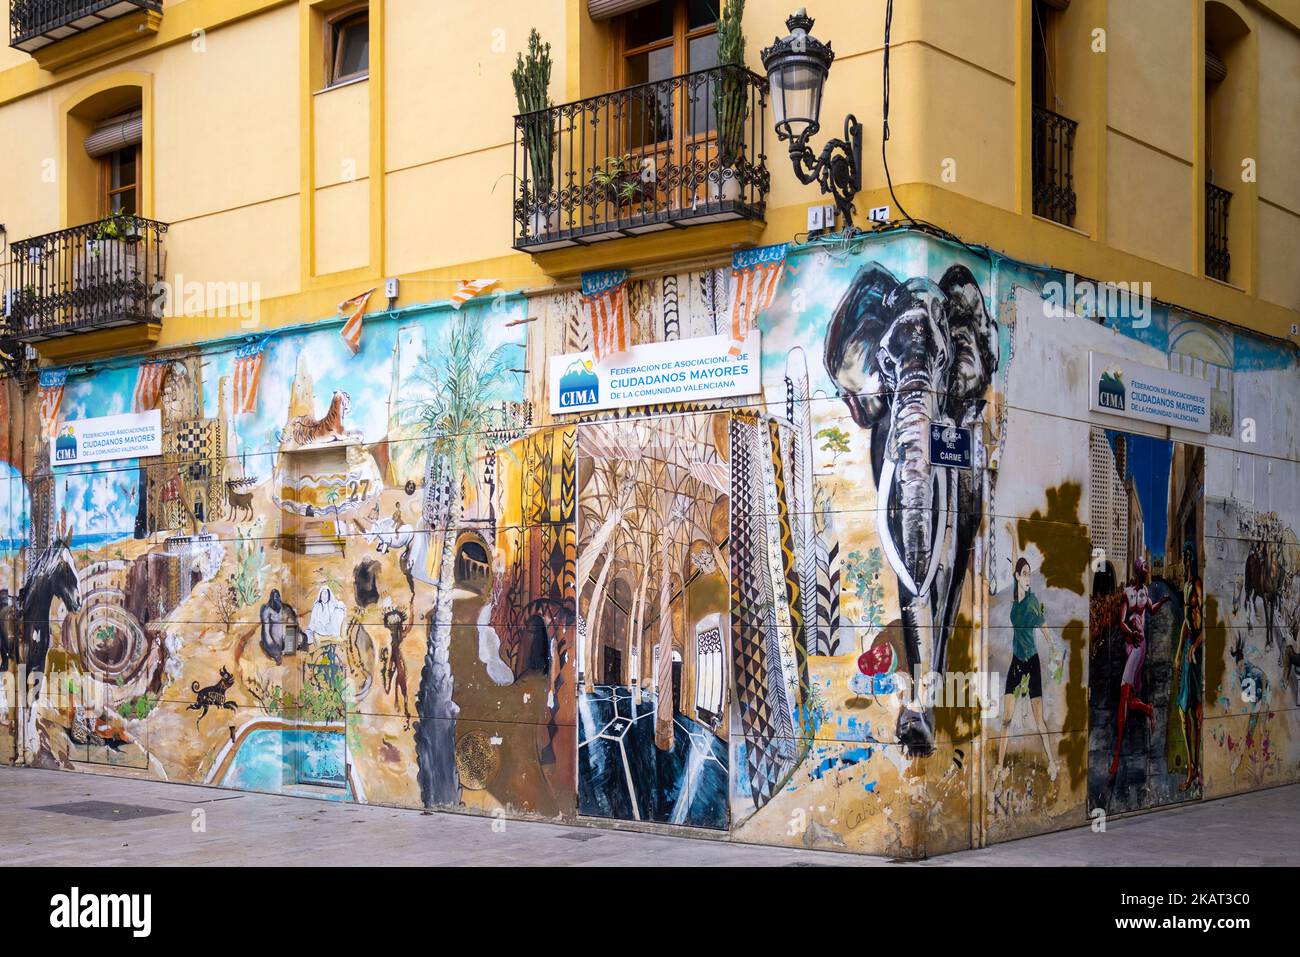 Graffiti on wall, Placa del Carme, Valencia, Spain Stock Photo